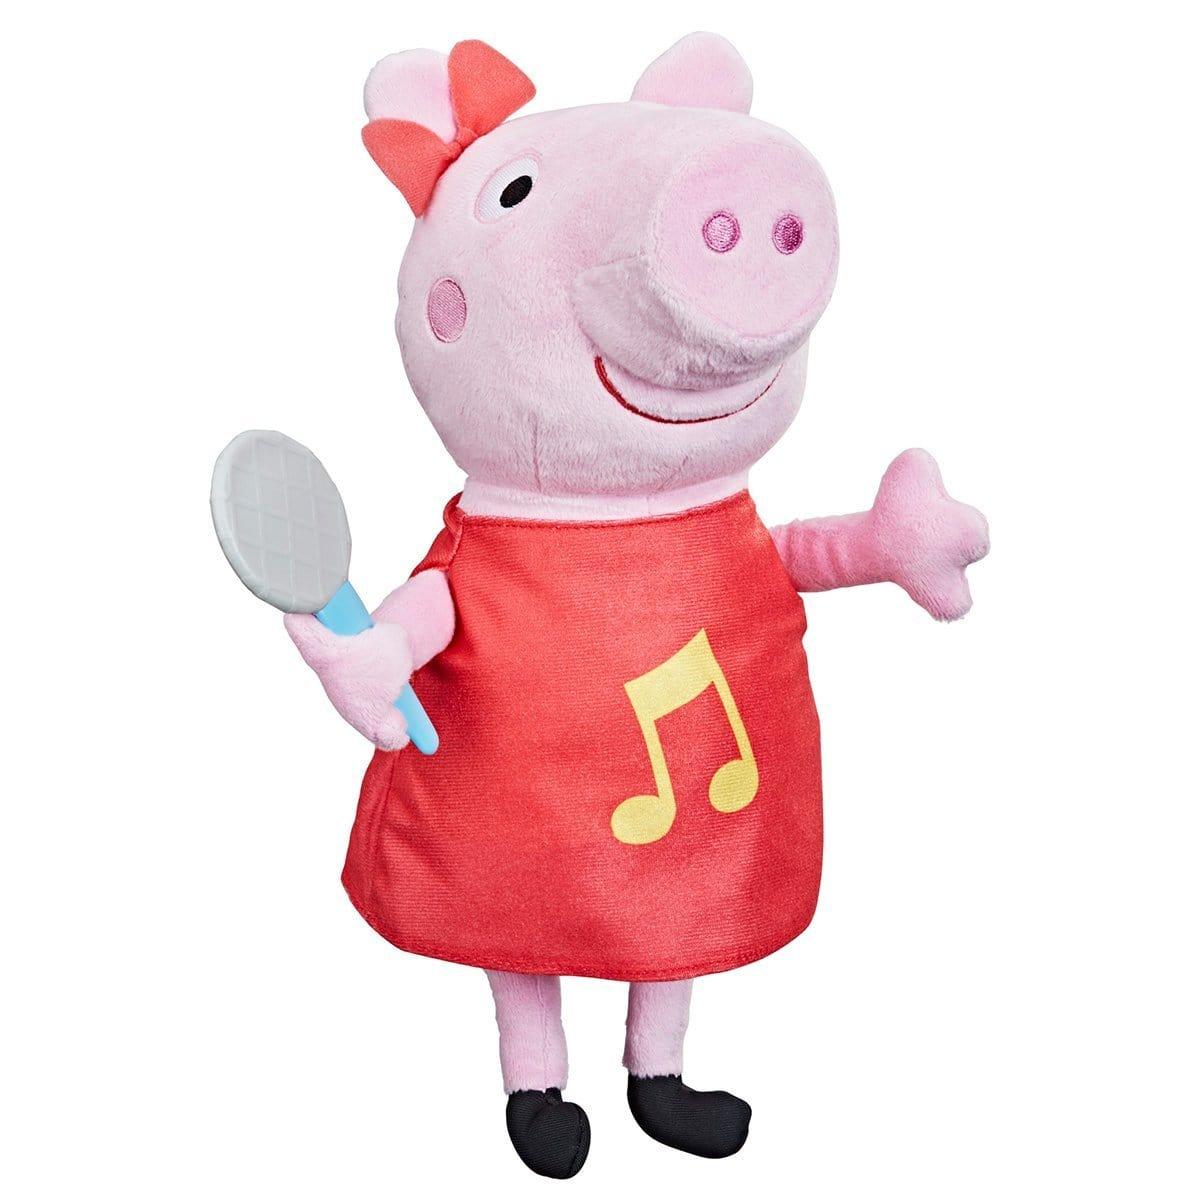 Peluche musicale de Peppa, Peppa Pig - Party Expert